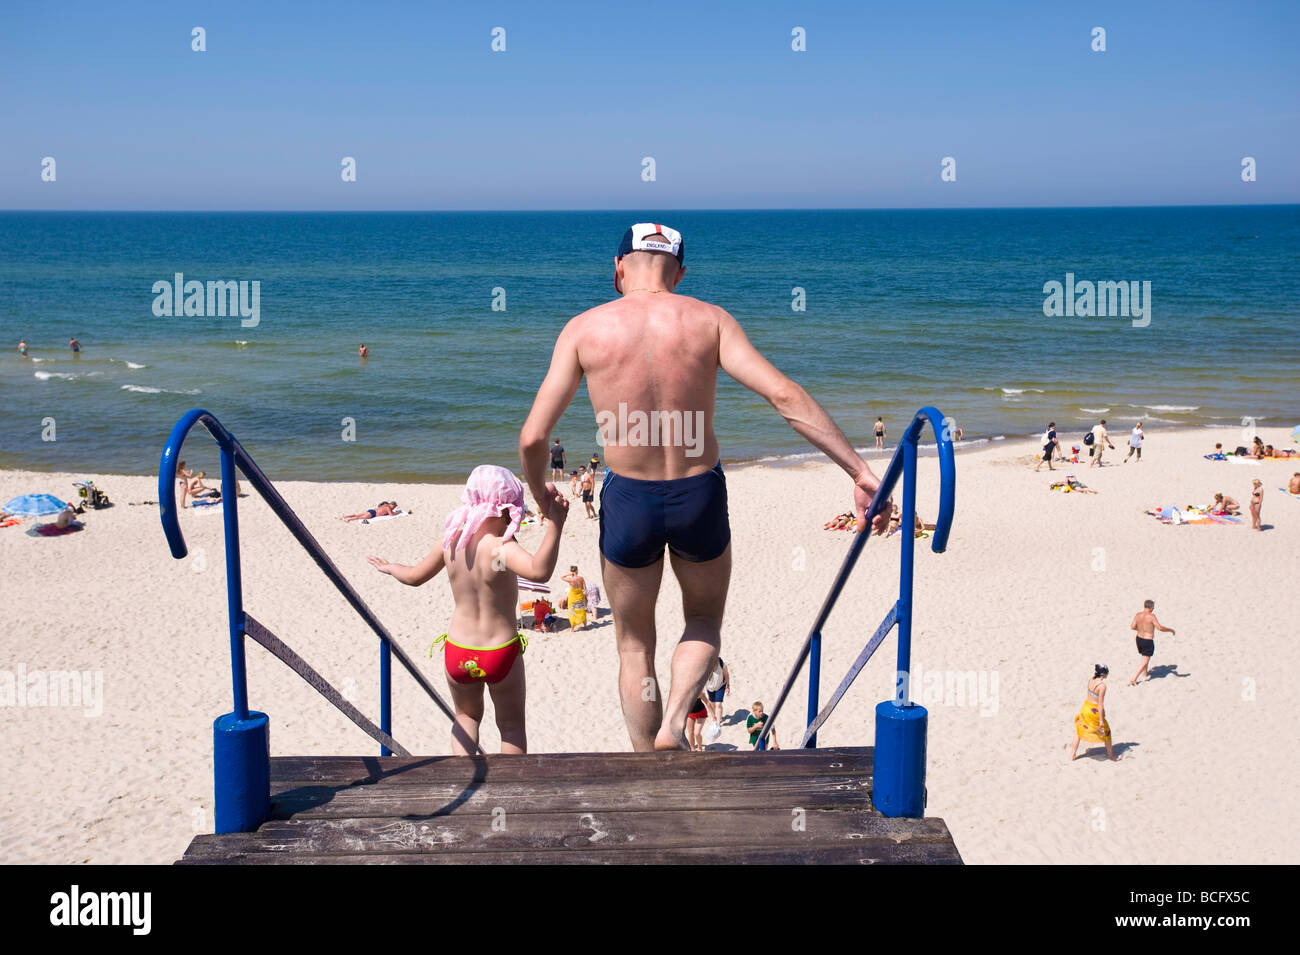 People enjoy hot summer day on sandy beach Baltic Sea Nida village Neringa Lithuania Stock Photo